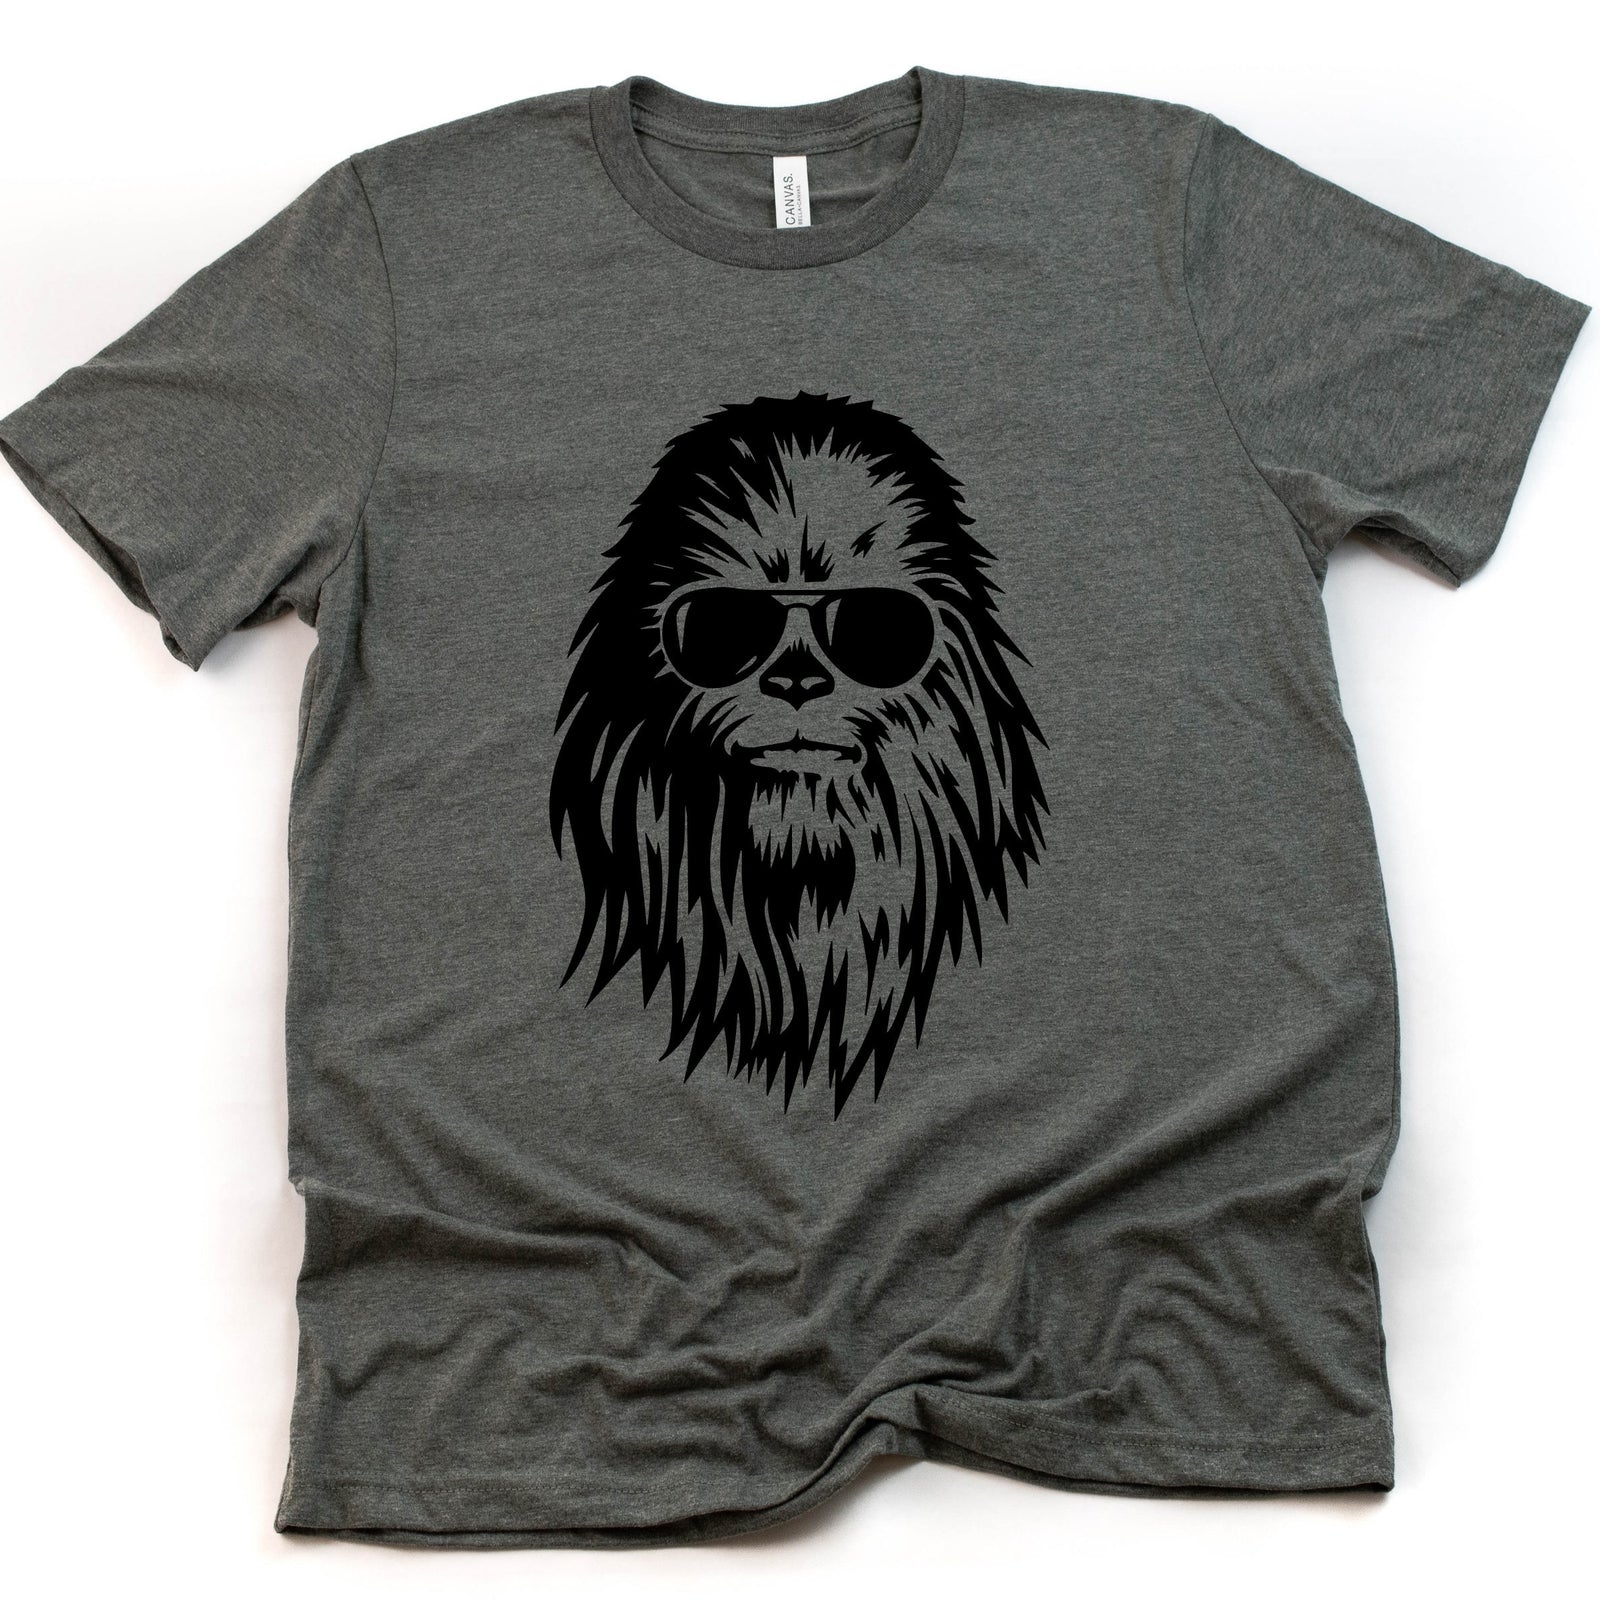 Chewbacca with Sunglasses  Disney Star Wars Adult Unisex T-shirt - Star Wars Gift Idea - Star Wars Lover T Shirt